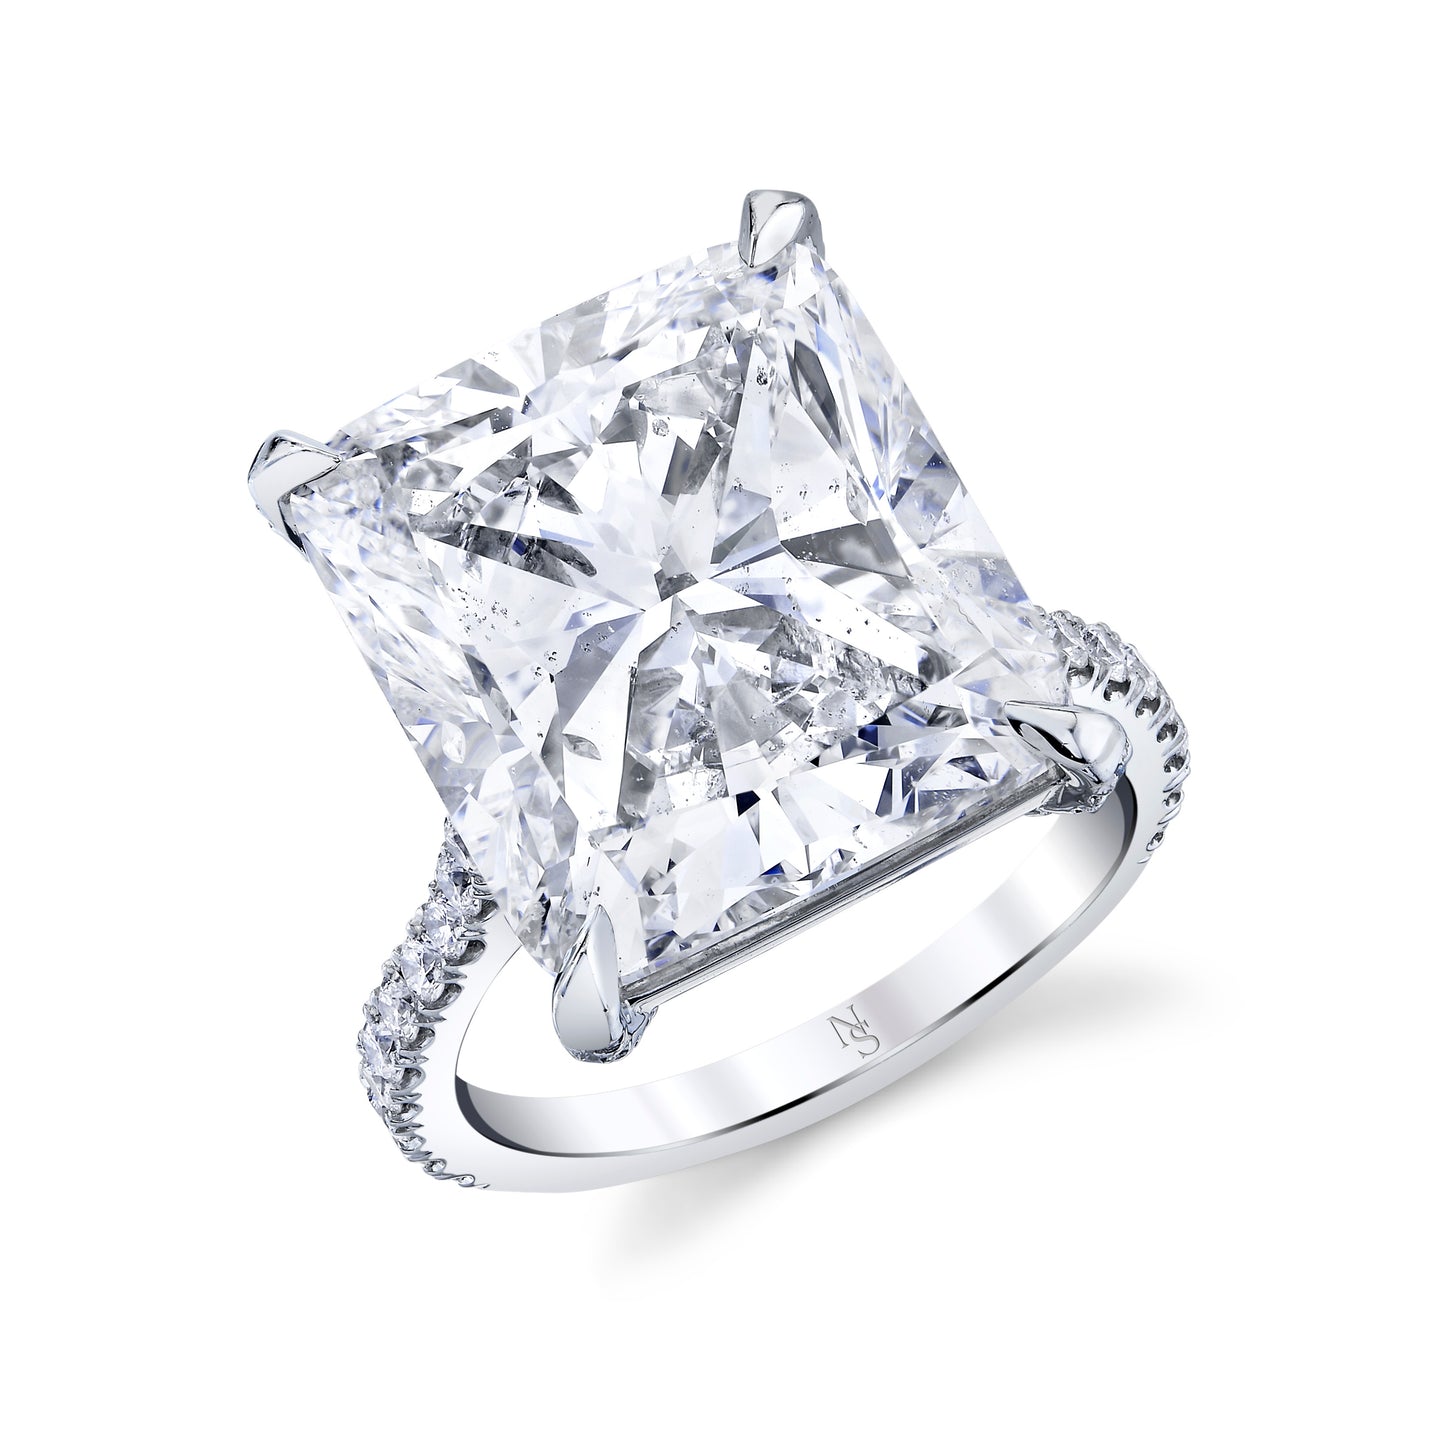 15.13 Carat Radiant Cut Diamond Ring